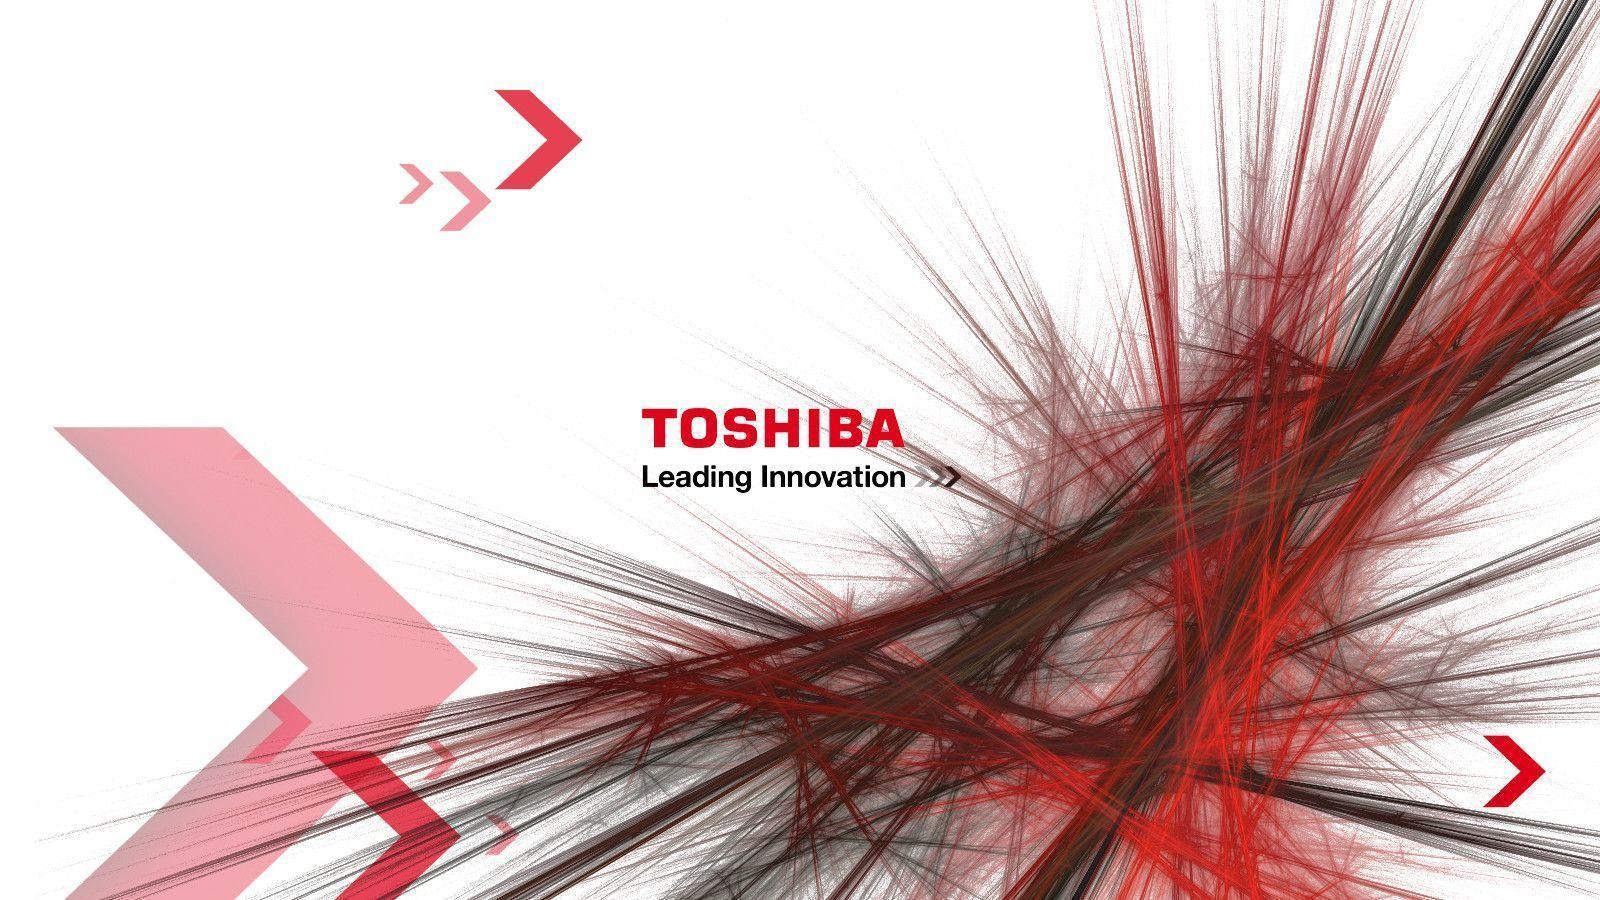 toshiba desktop wallpaper download